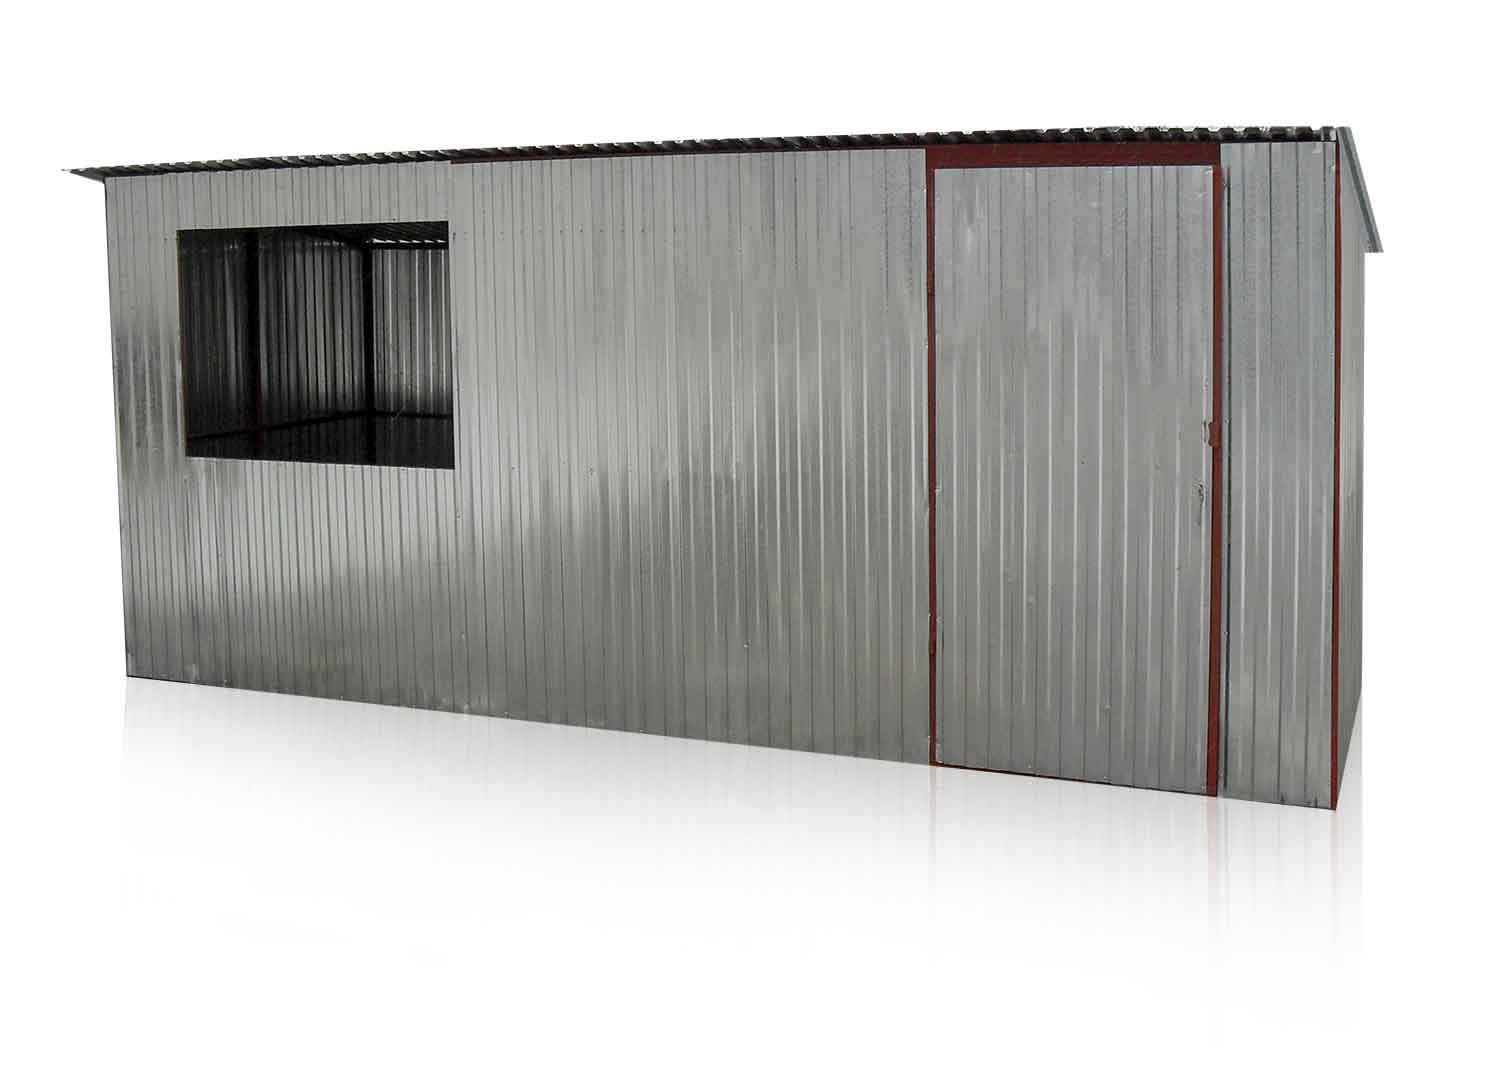 Plechová garáž 5x3 so spádom strechy dozadu